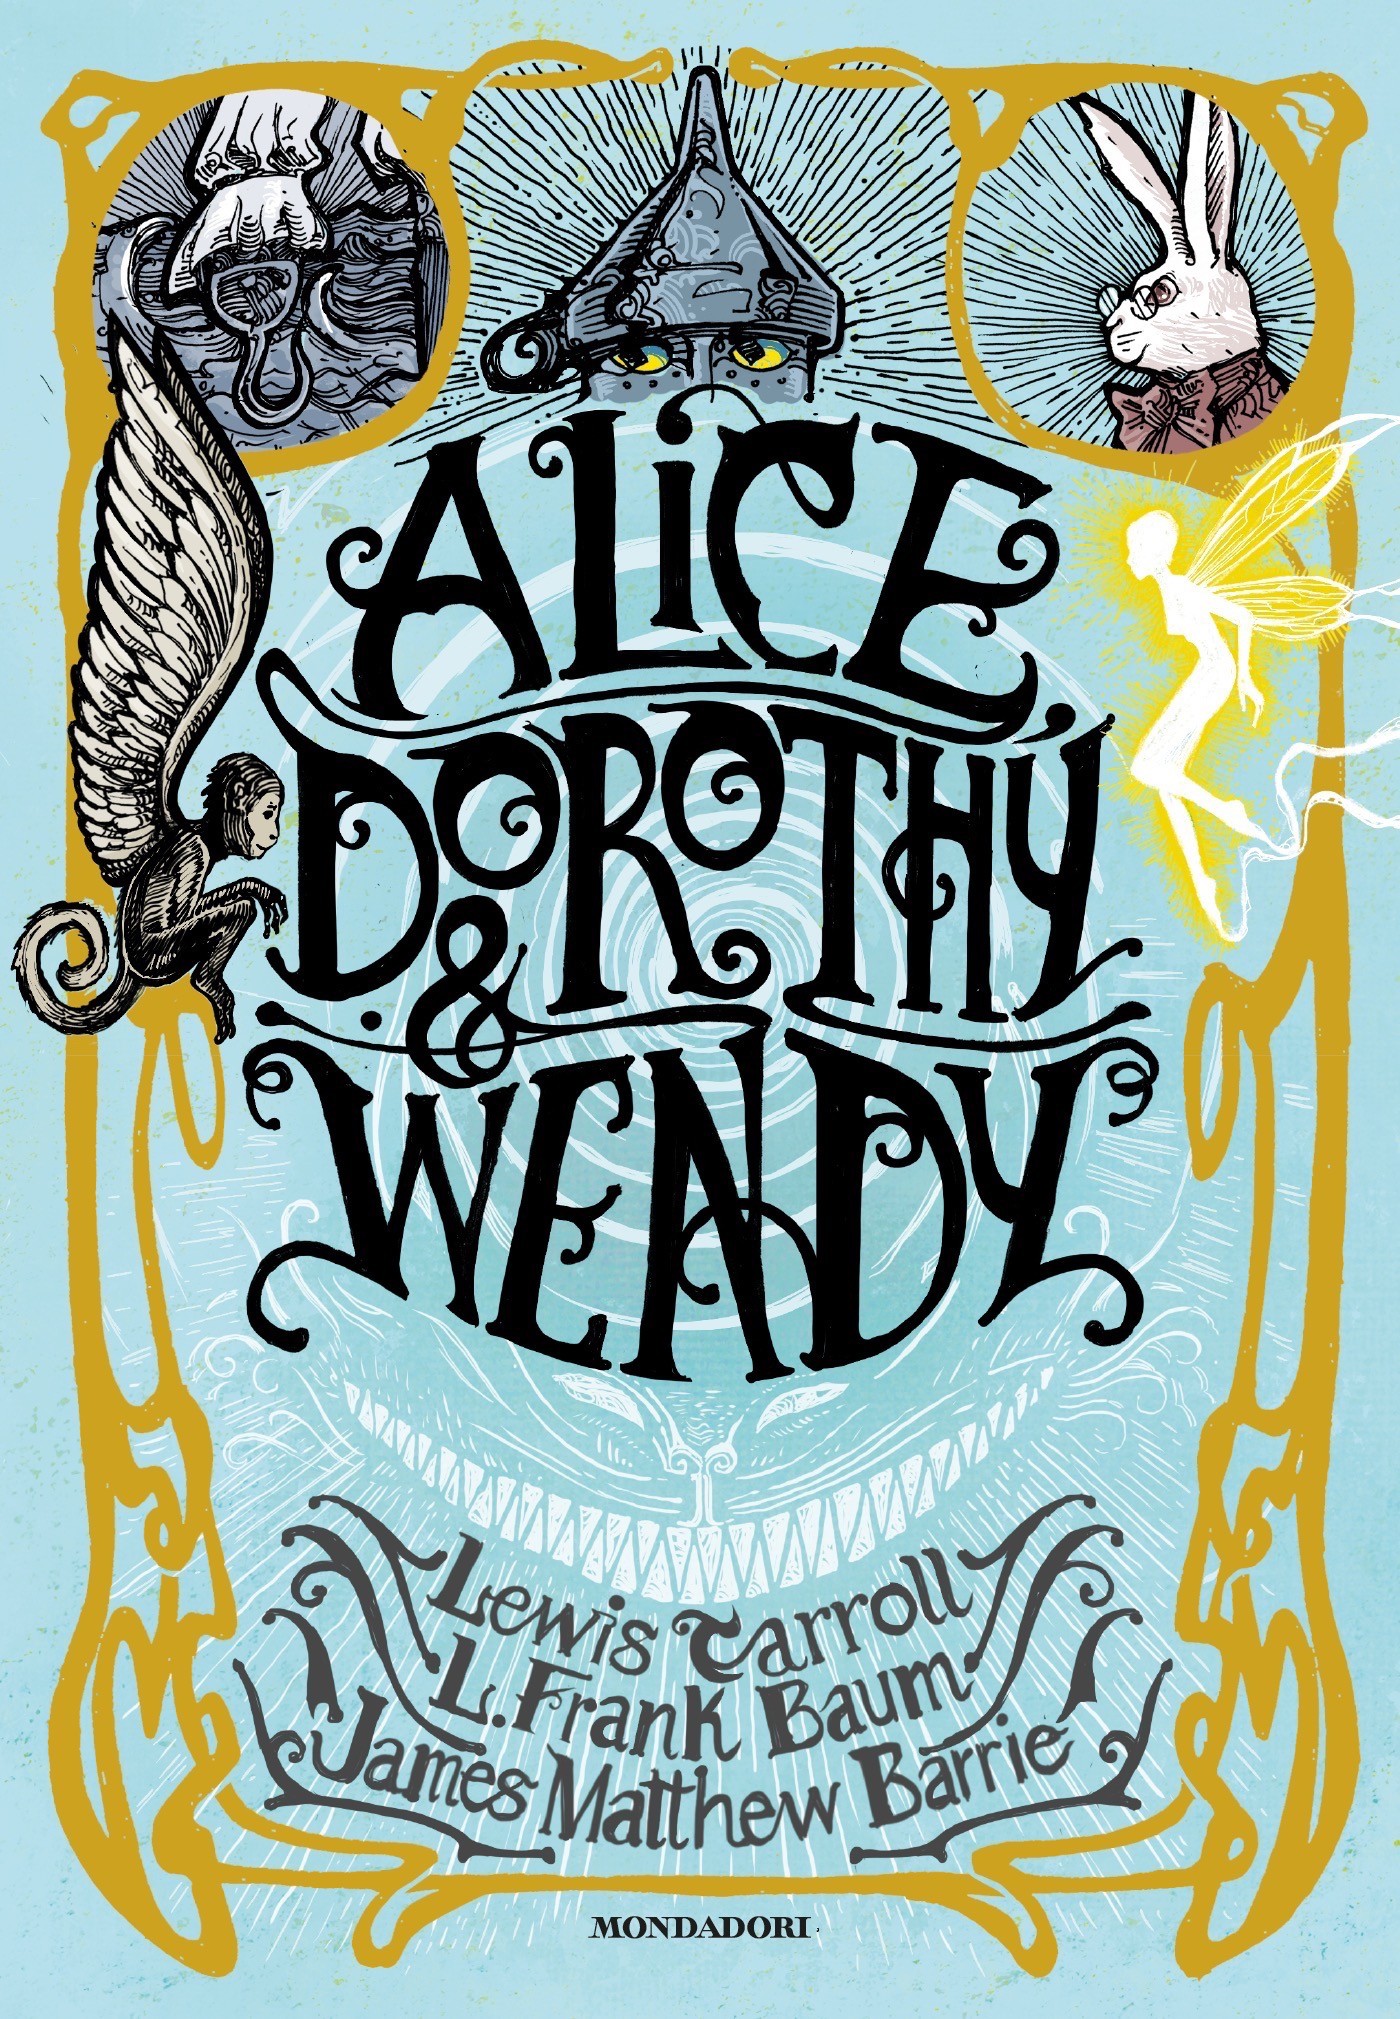 Alice, Dorothy & Wendy - Librerie.coop